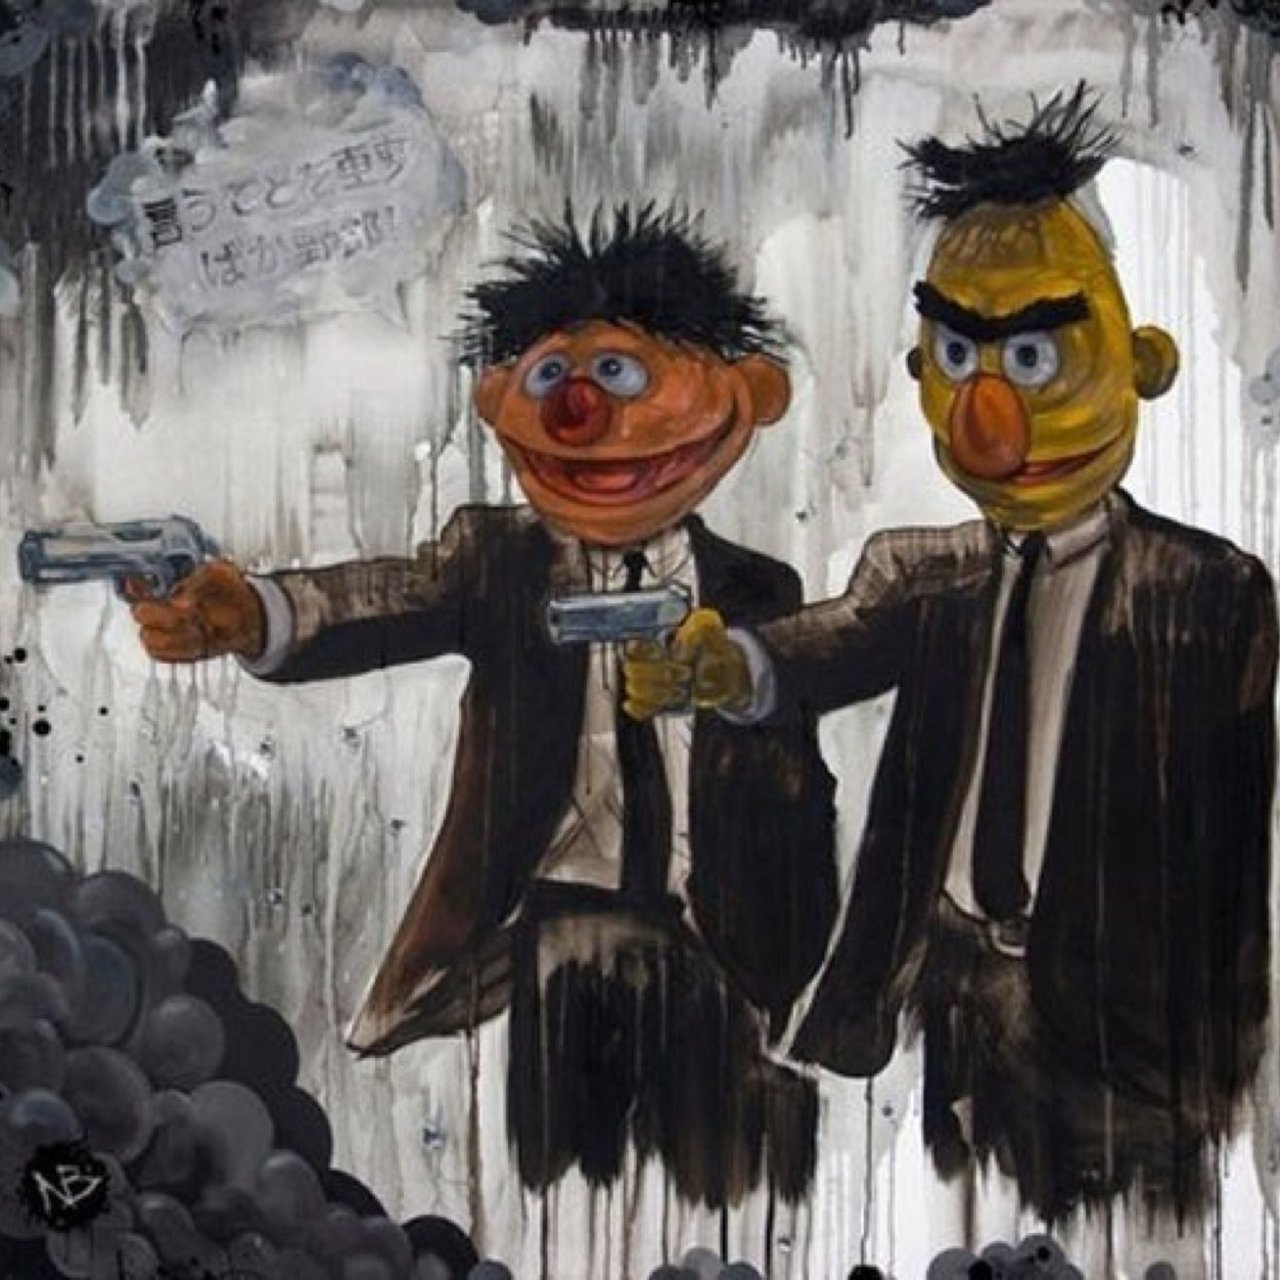 "Pulp Street"Bert and Ernie - Pulp Fiction#streetart #urbanrt #graffiti #mural by Beery Method https://t.co/SoZTzLZmGt